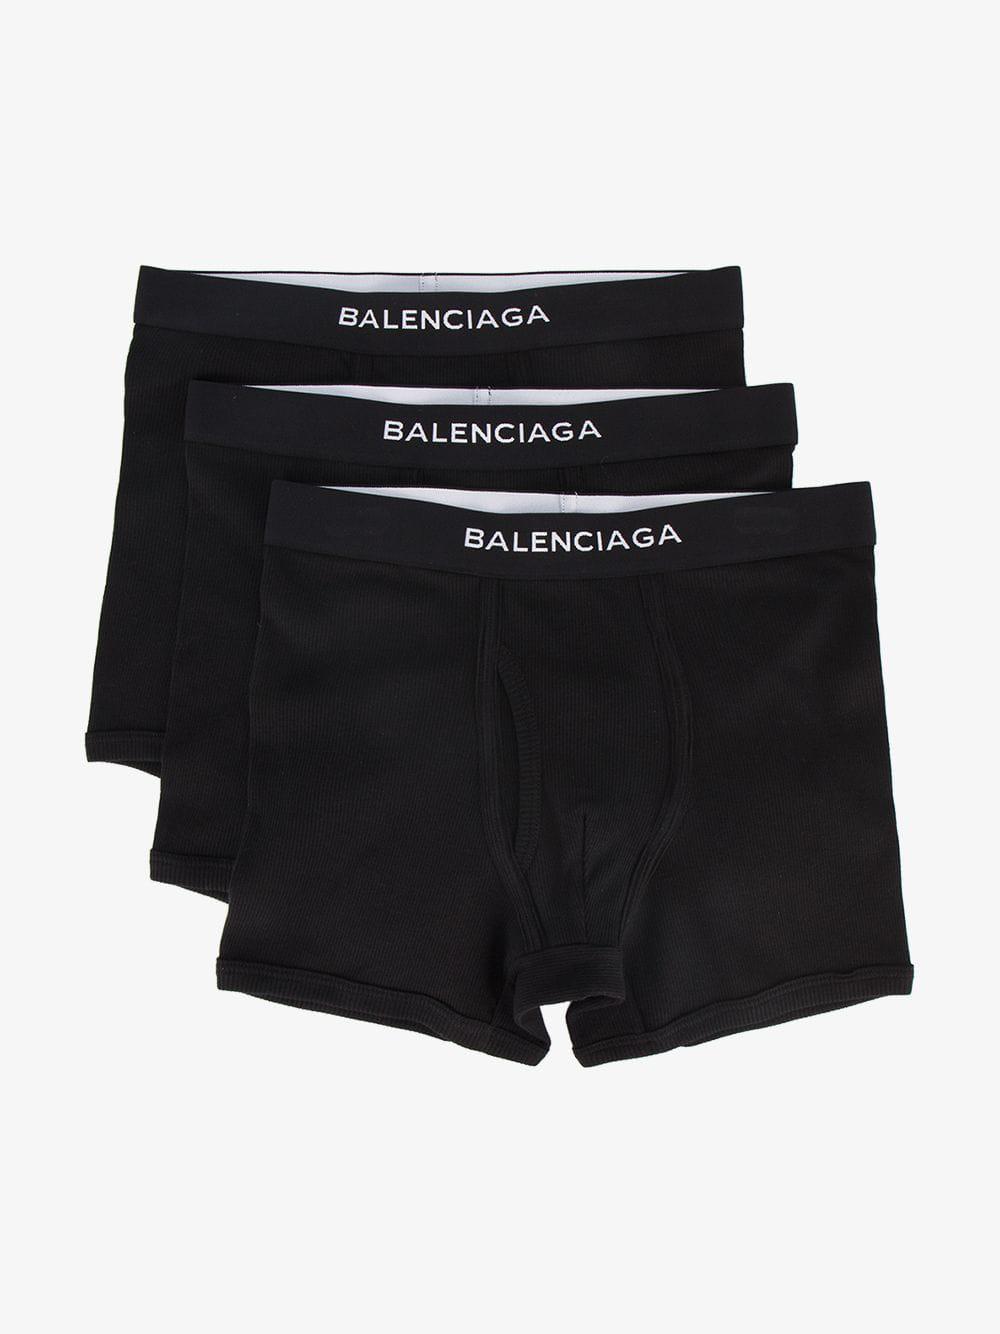 Balenciaga Black Boxer Briefs By for Men | Lyst